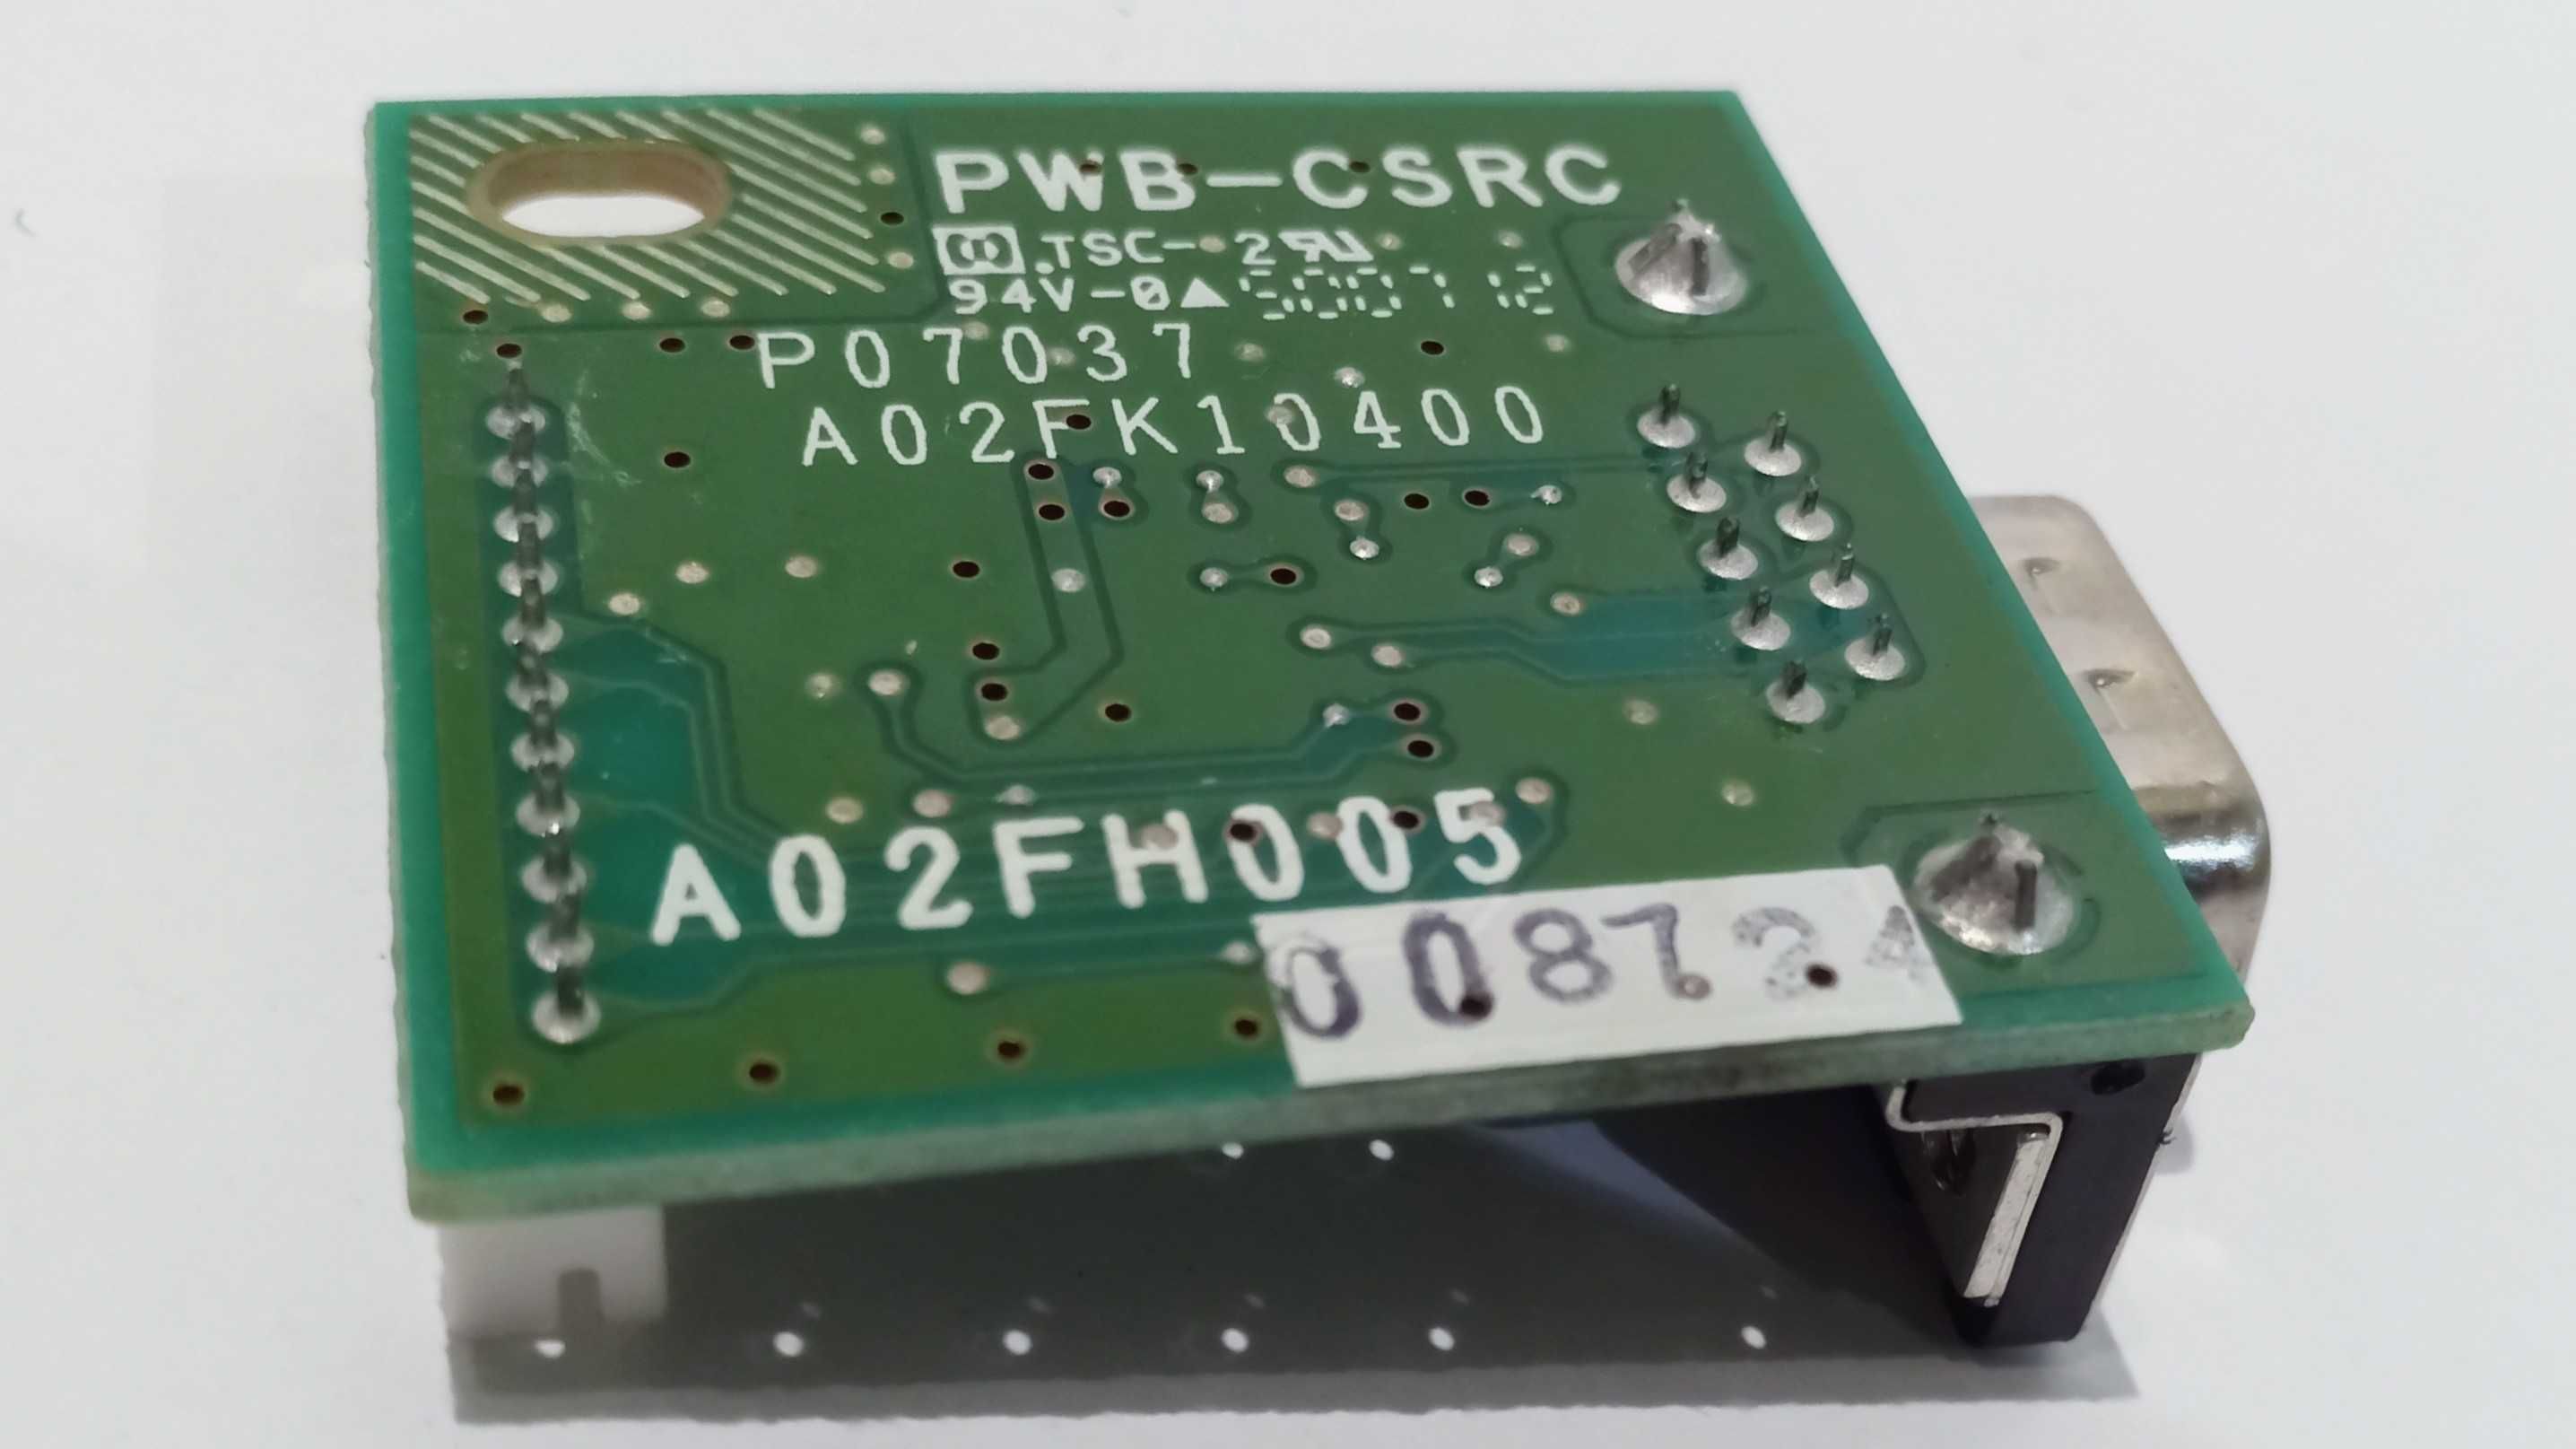 Intelligent RS-232 Transceivers PWB-CSRC P07037 A02FH005 A02FK10400